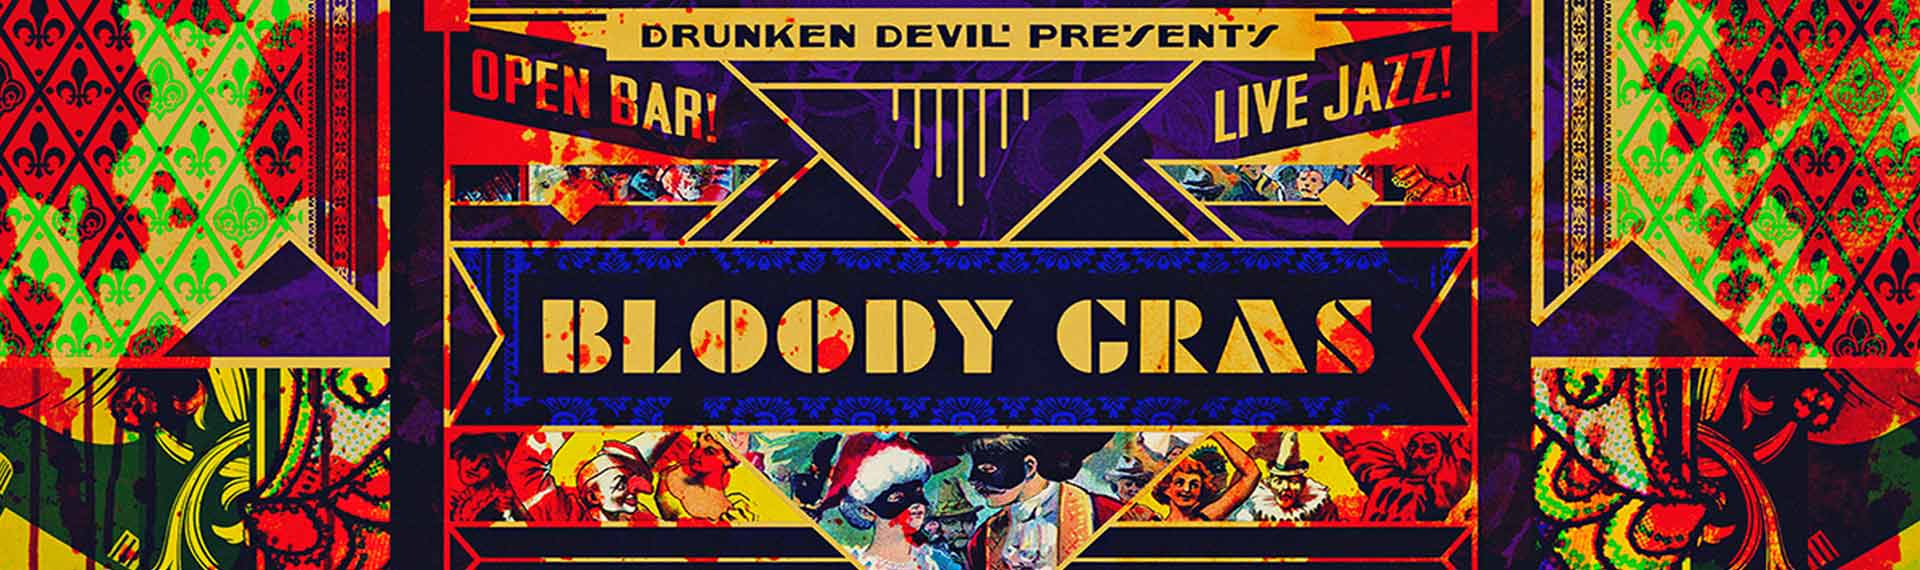 Drunken Devil Bloody Gras Review